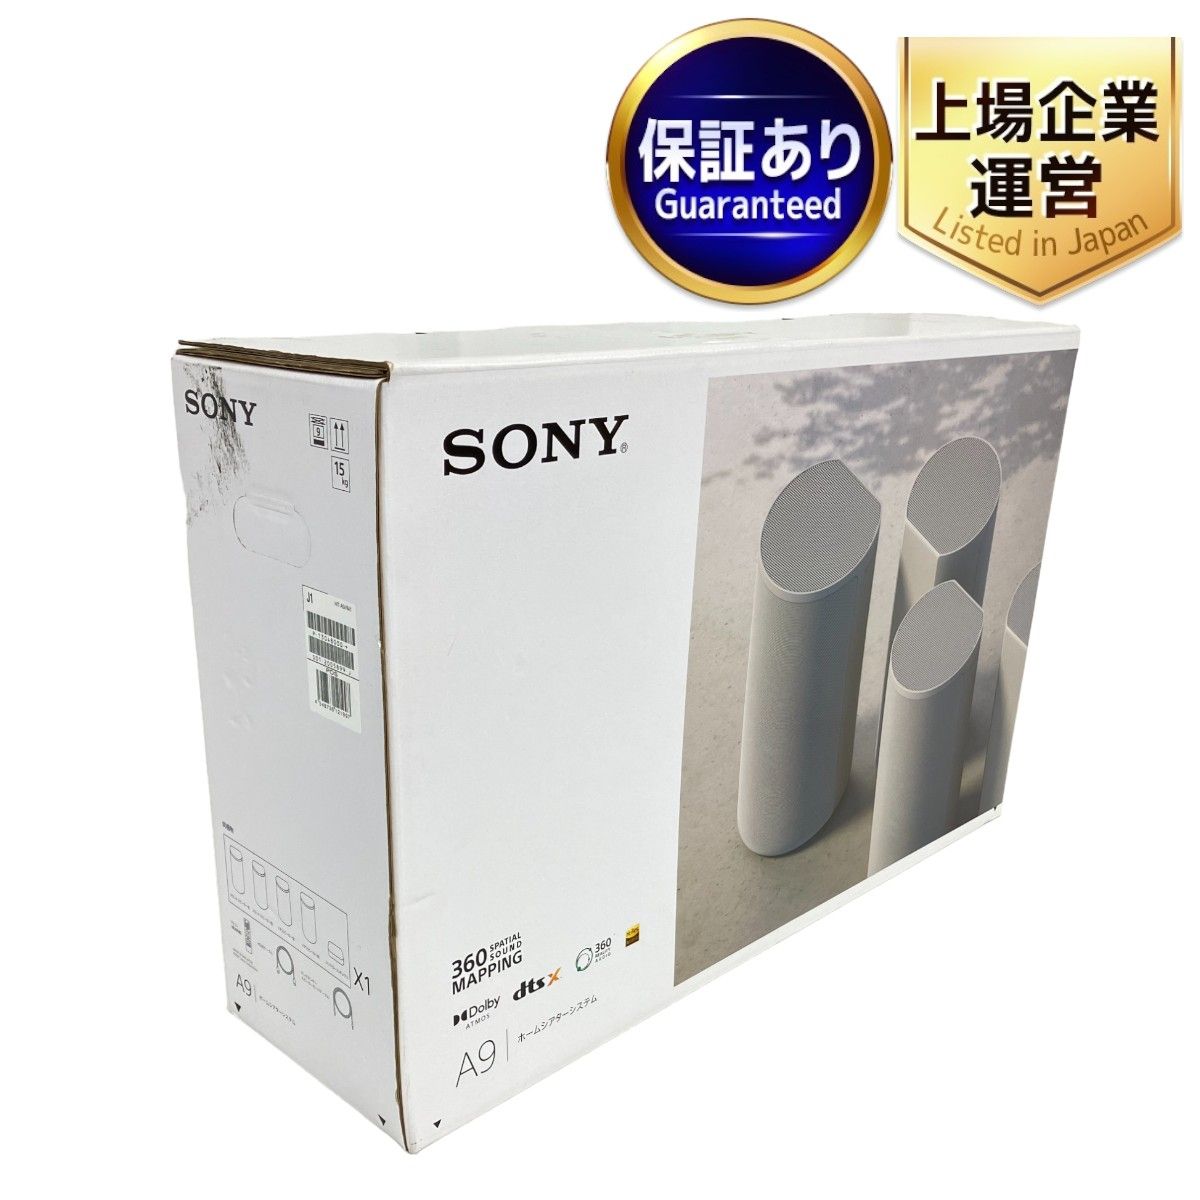 SONY ソニー HT-A9 ホームシアターシステム 360 Spatial Sound Mapping サウンドシステム オーディオ 未使用  K9036748 - メルカリ